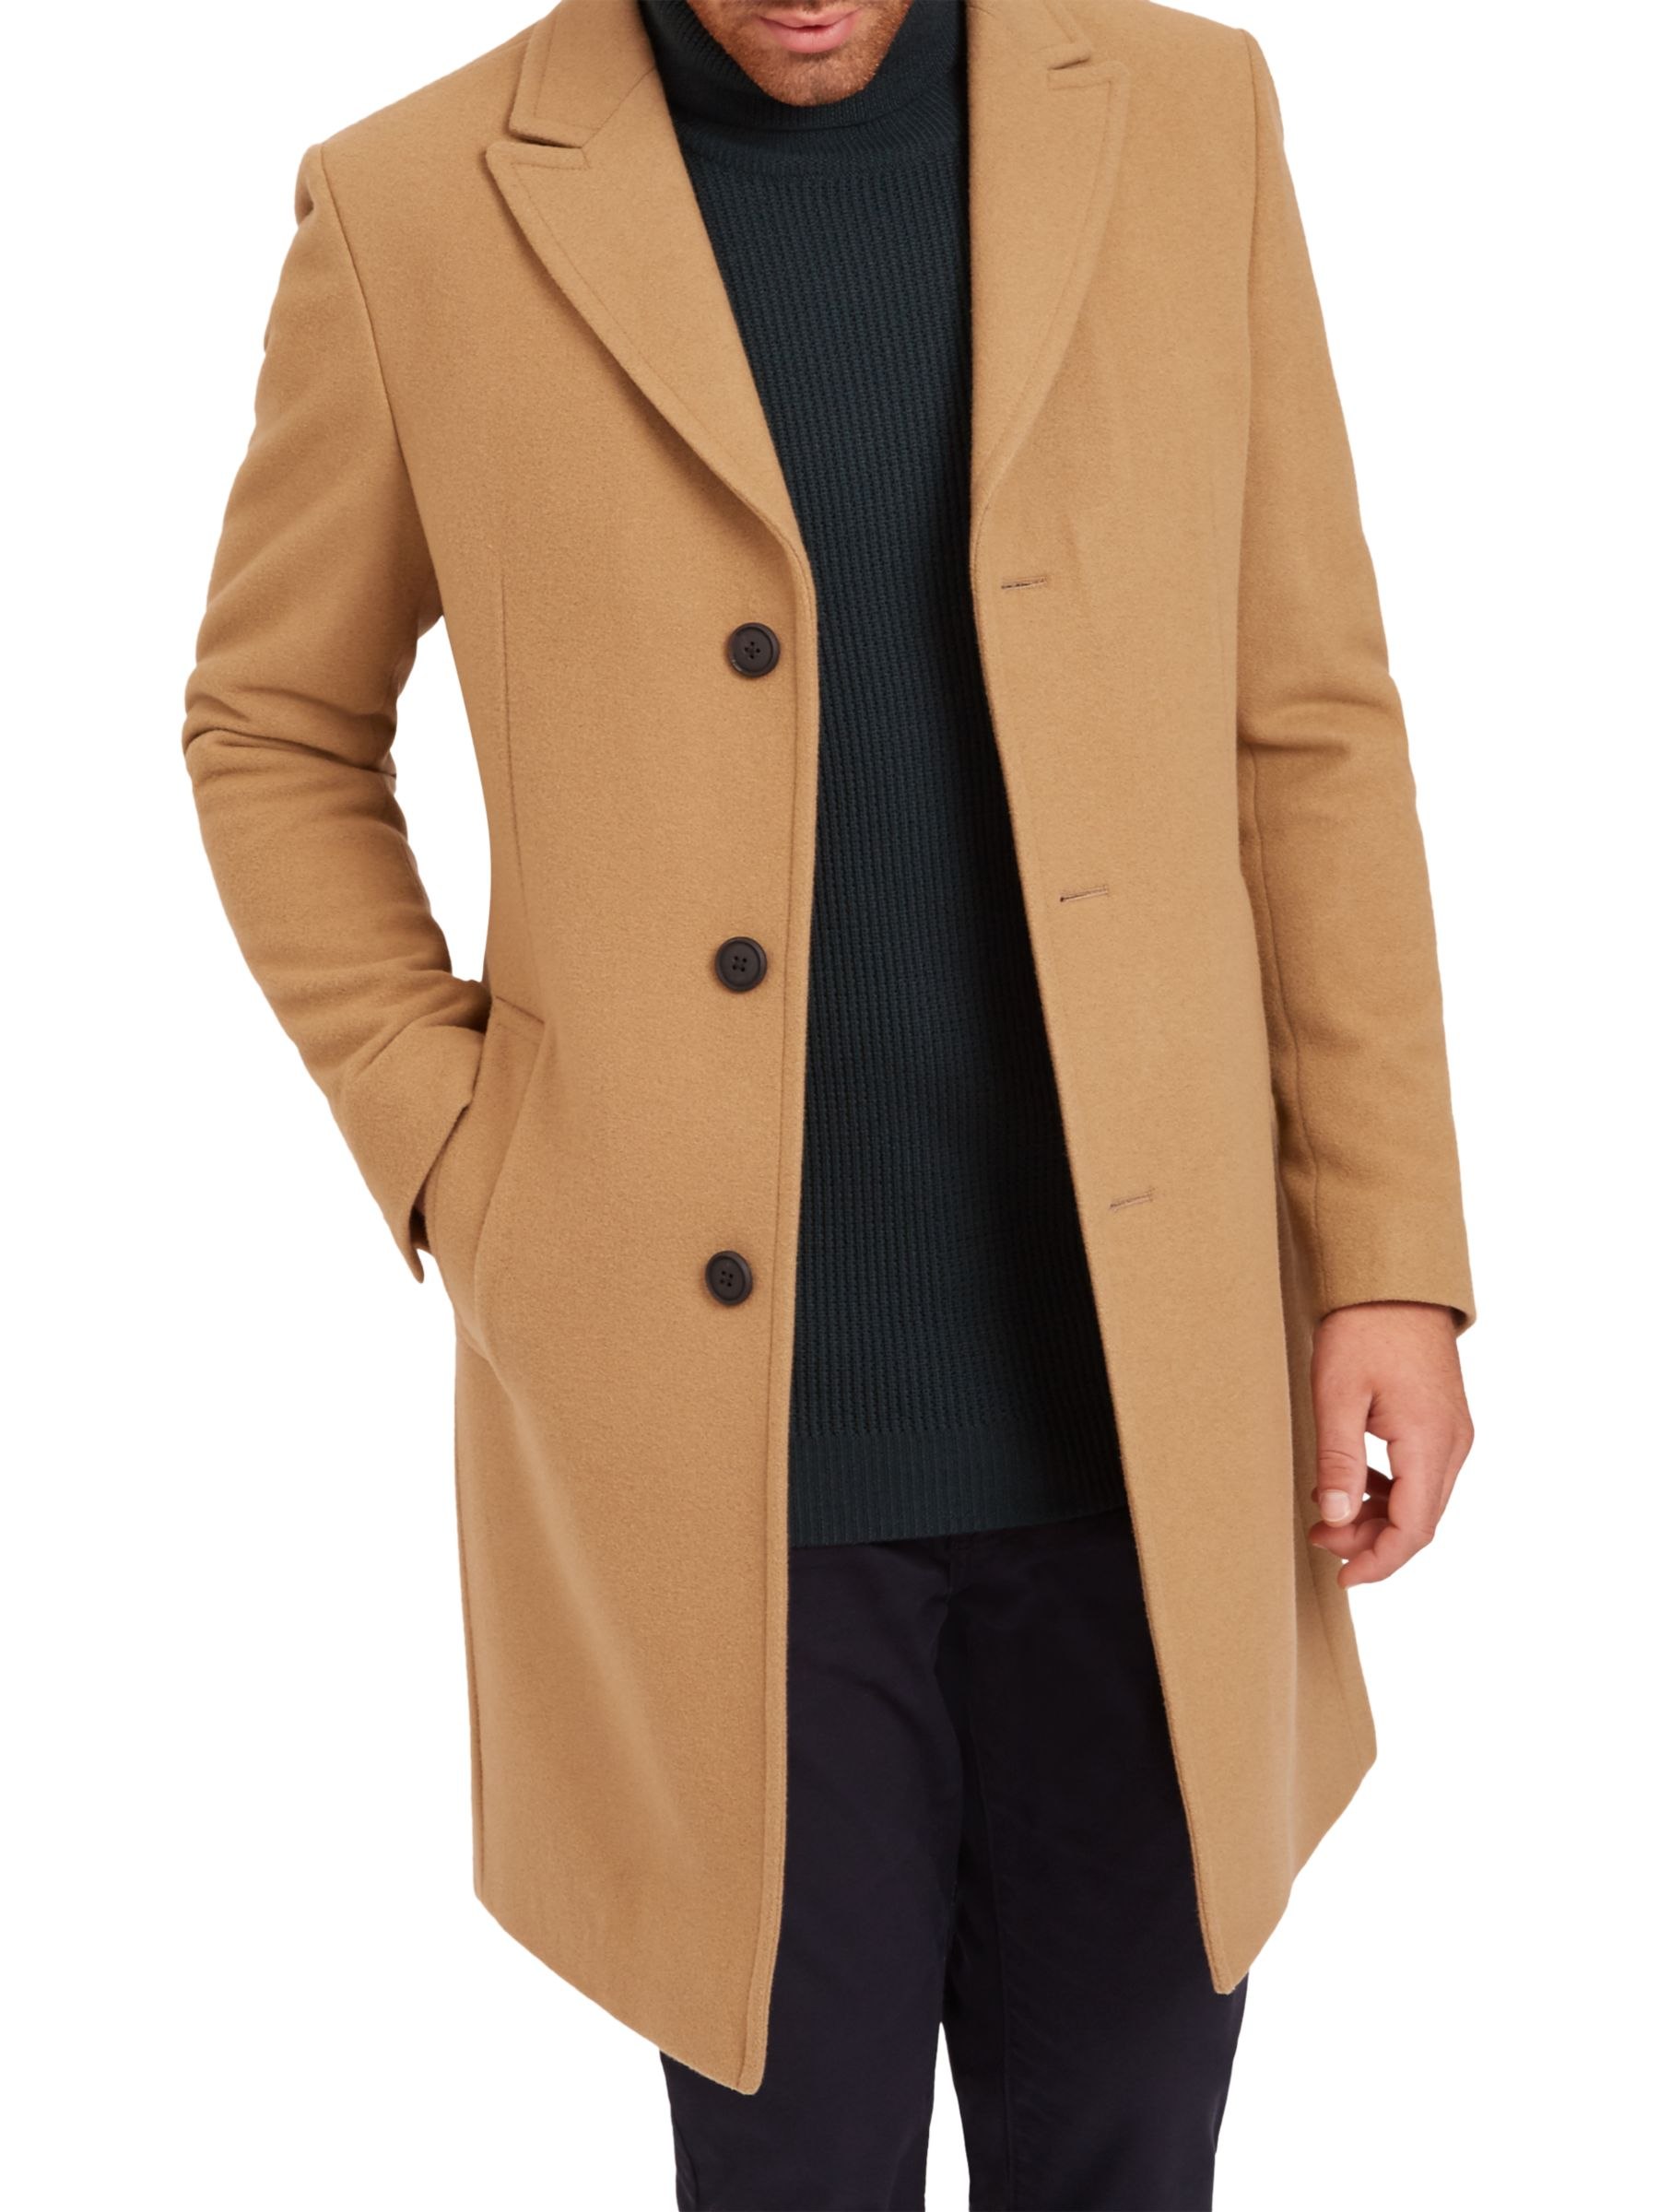 Пальто мужское минск. Боттега пальто мужское кашемировое пальто. Пальто кэмэл мужское длинное. Пальто Честерфилд мужское.